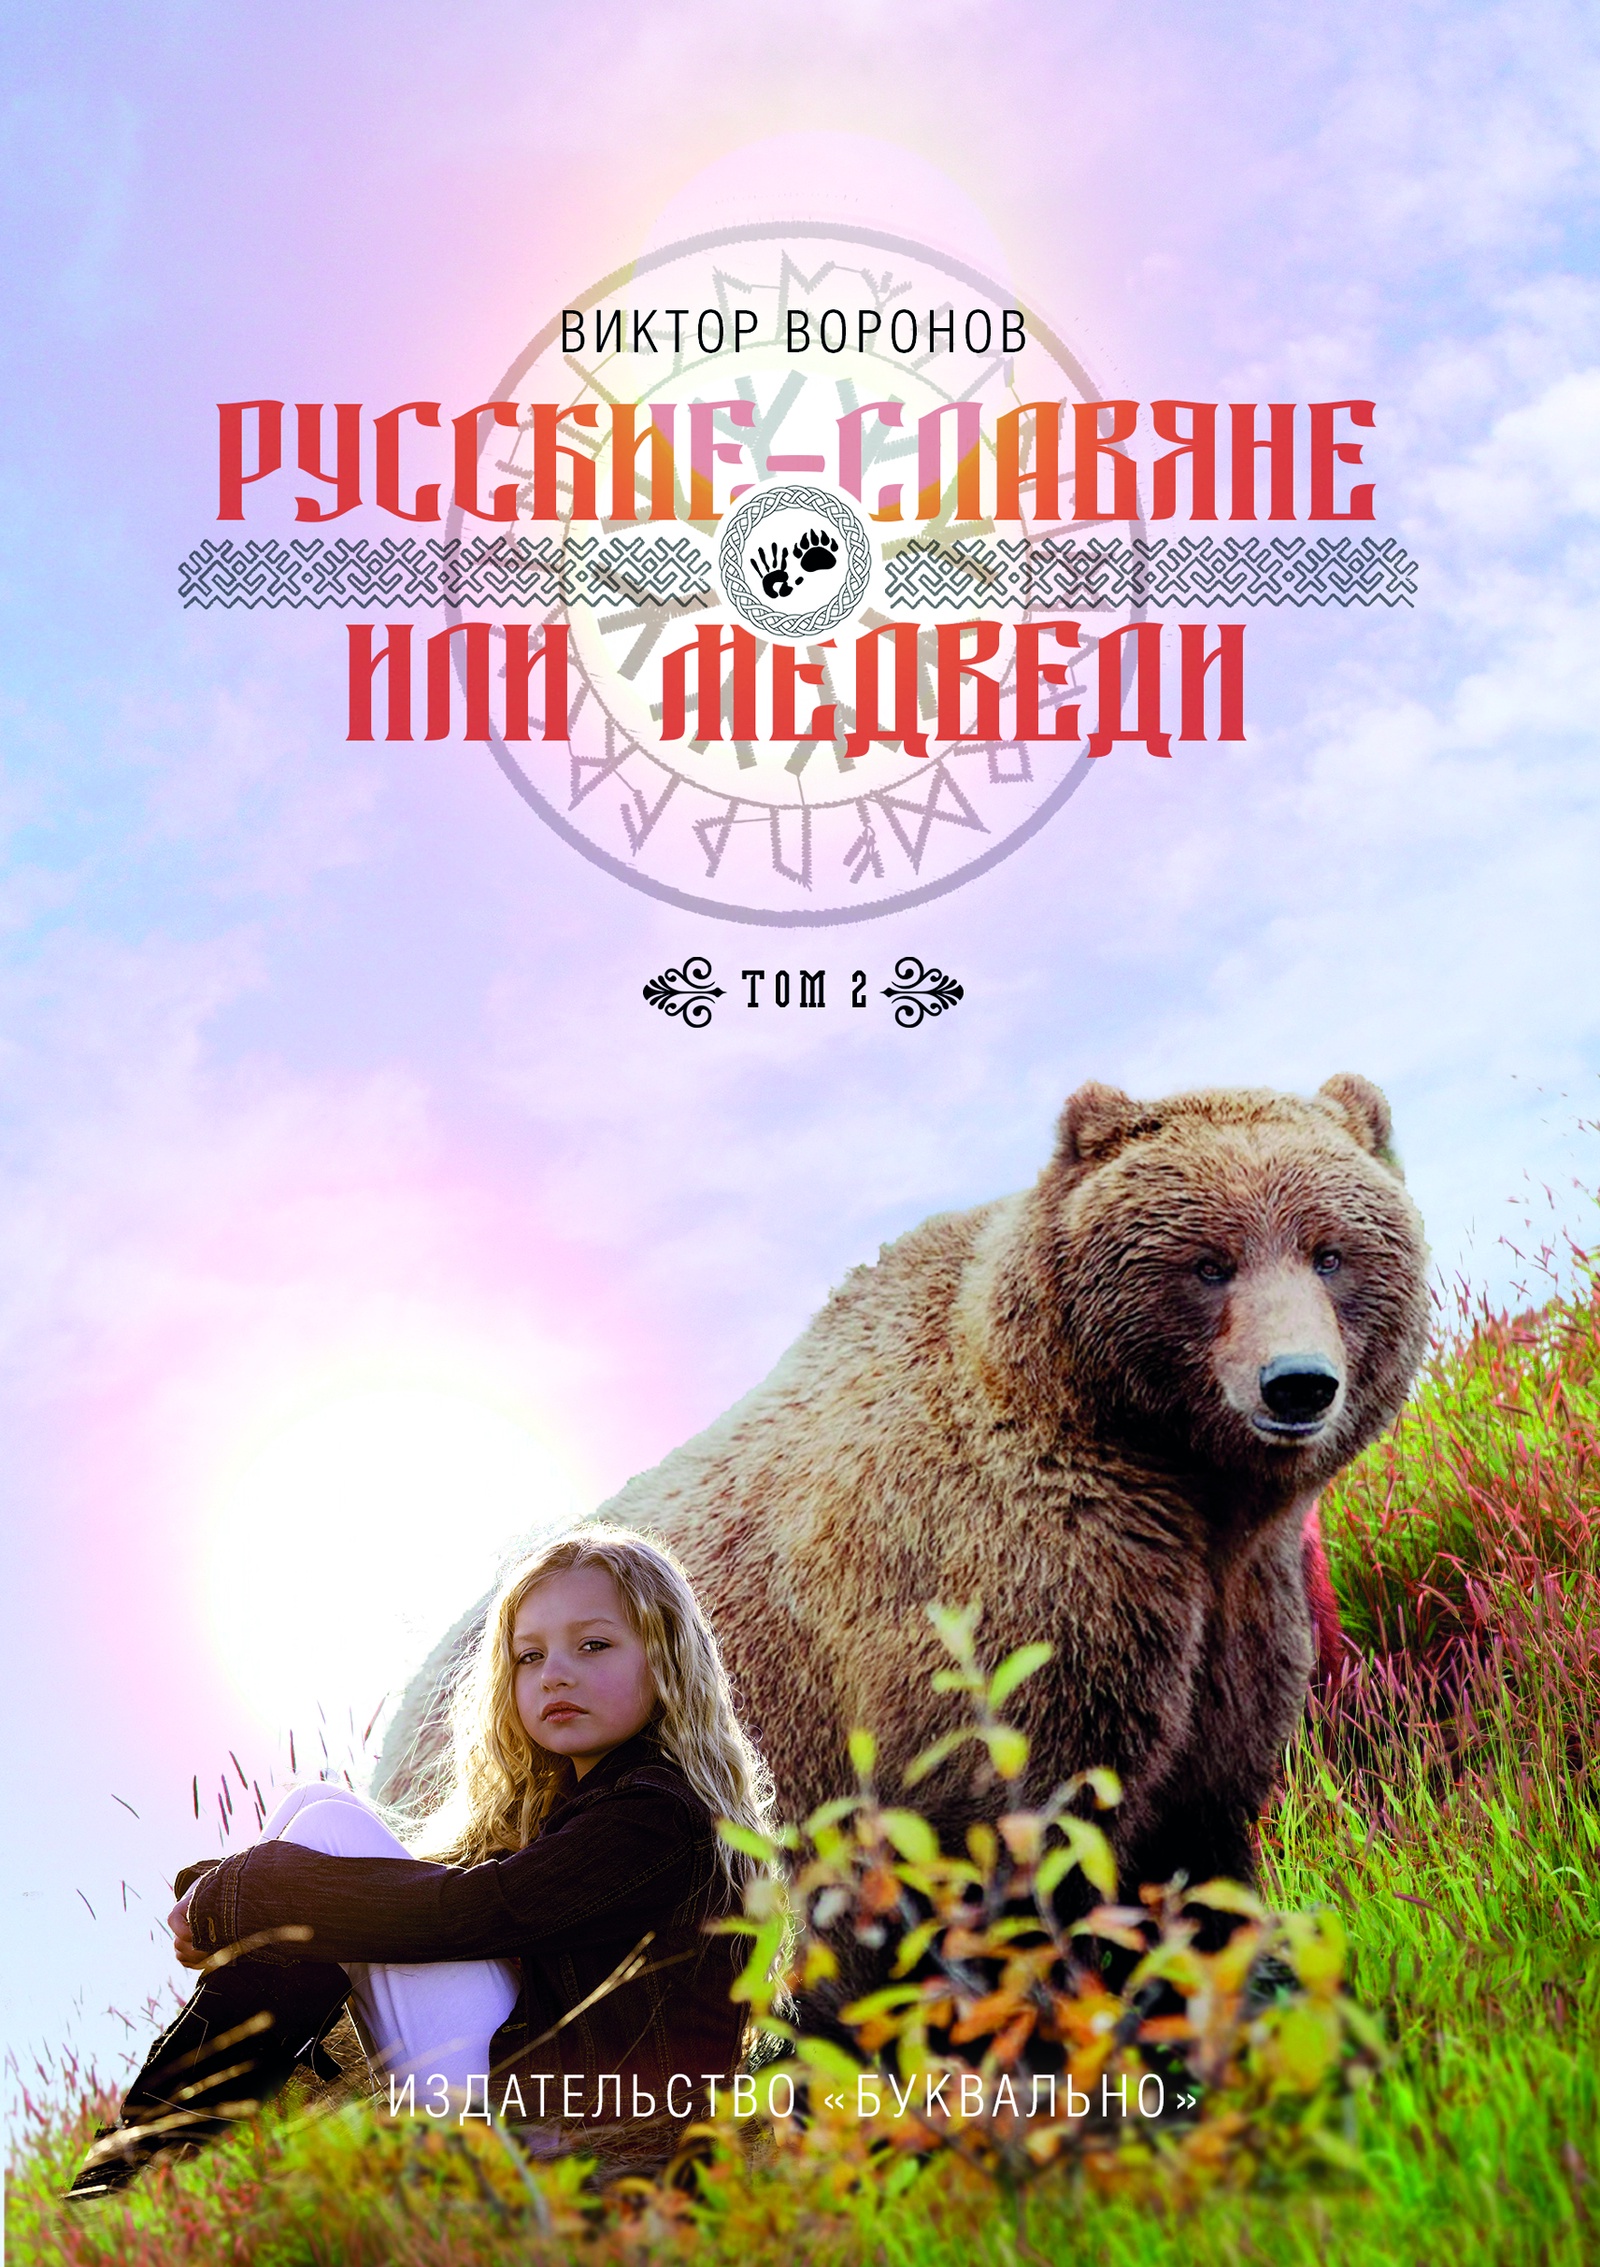 Русские - славяне или медведи